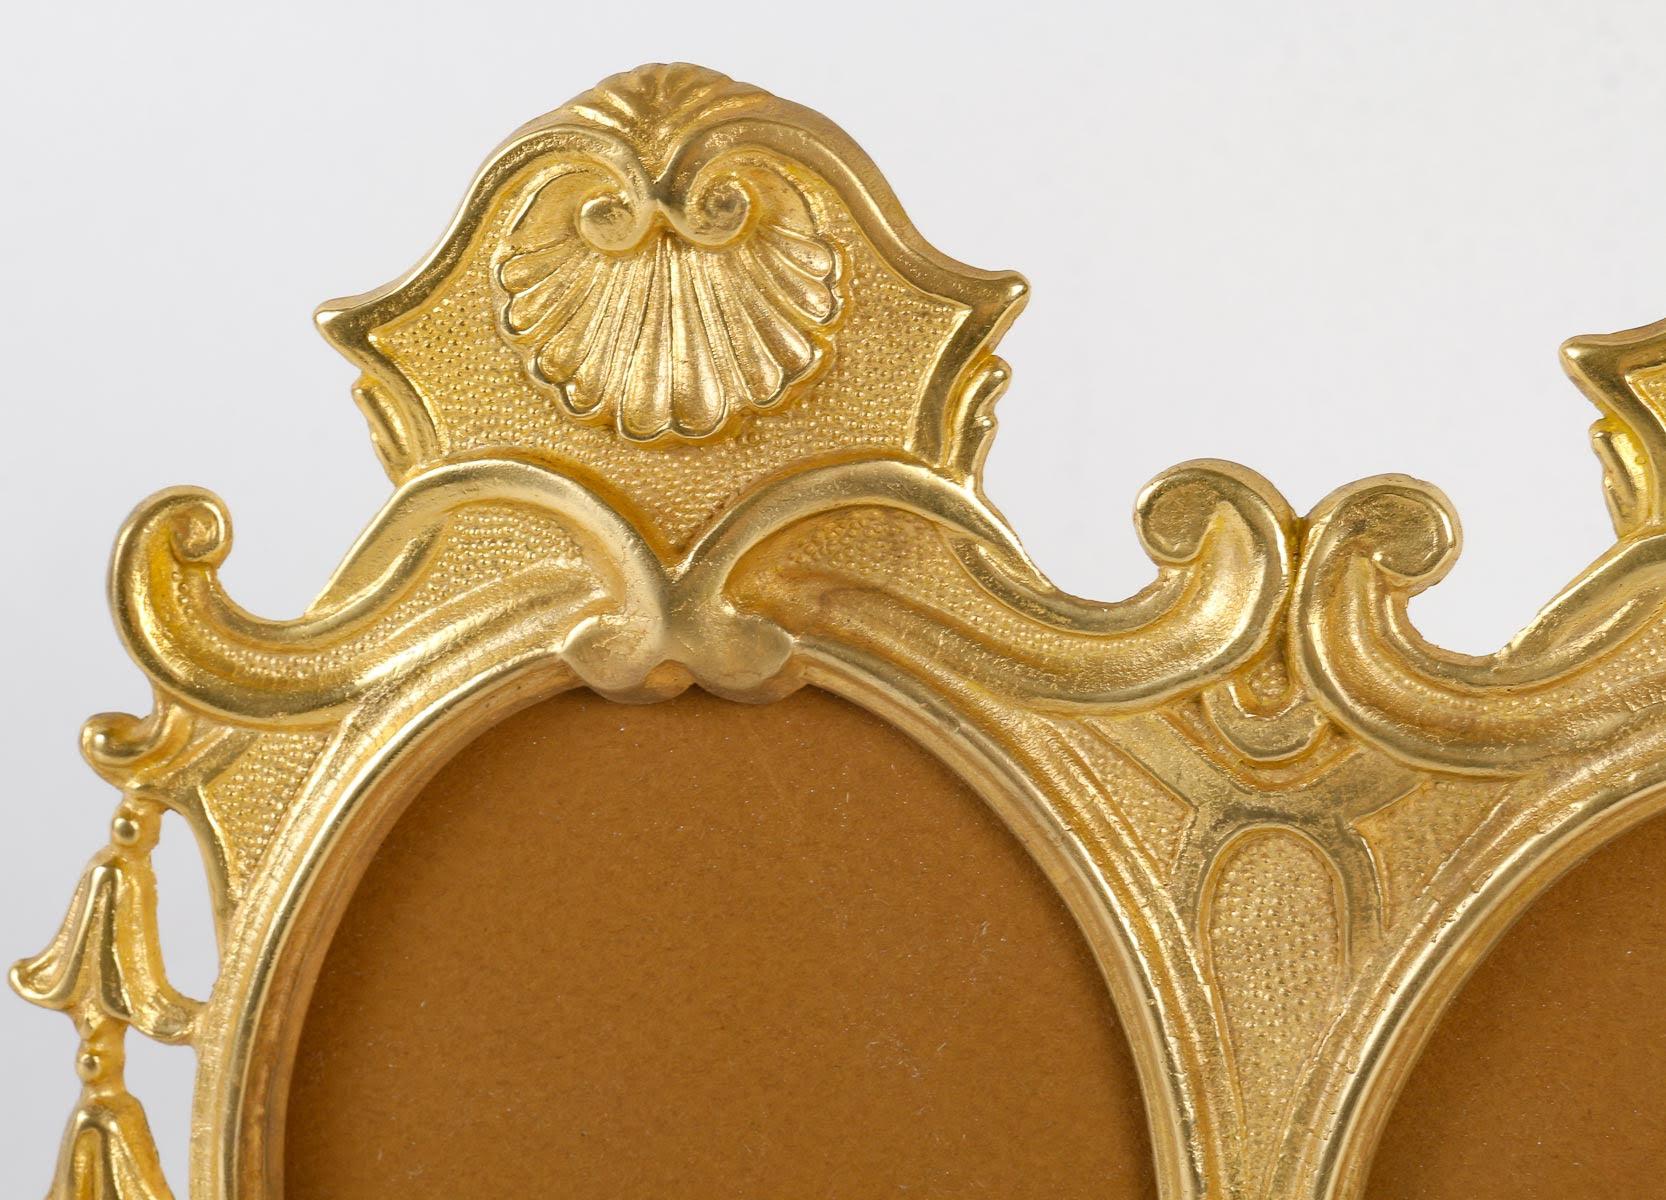 Doppelter Fotorahmen aus vergoldeter Bronze, Periode Napoleon III.

Doppelter Fotorahmen aus vergoldeter Bronze im Stil Louis XV, Periode Napoleon III, 19.
H: 23,5cm, B: 19cm, T: 1,5cm